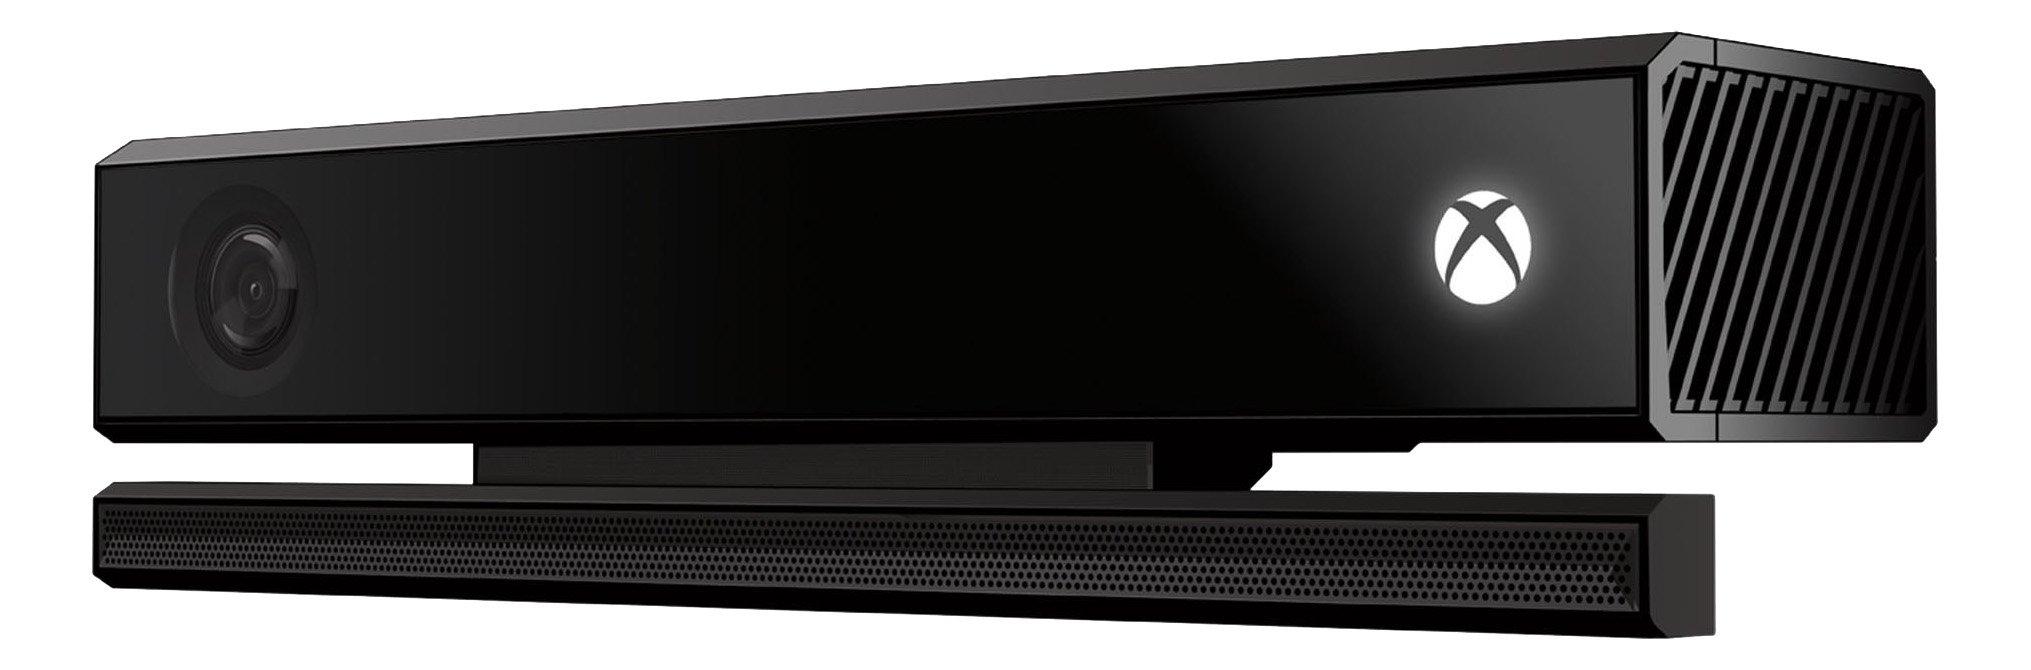 Video Game Microsoft Xbox 360 4GB Kinect Sensor